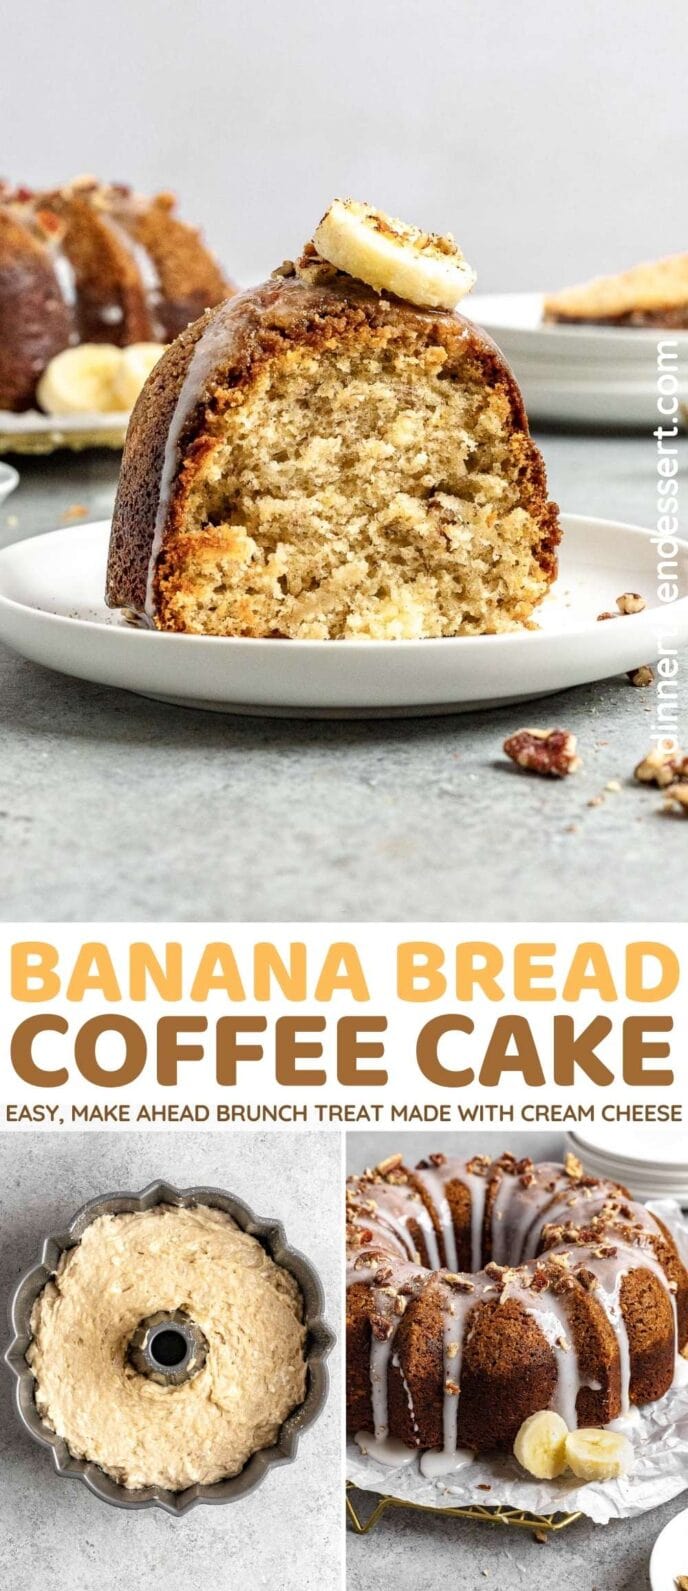 Banana Bread Coffee Cake Collage